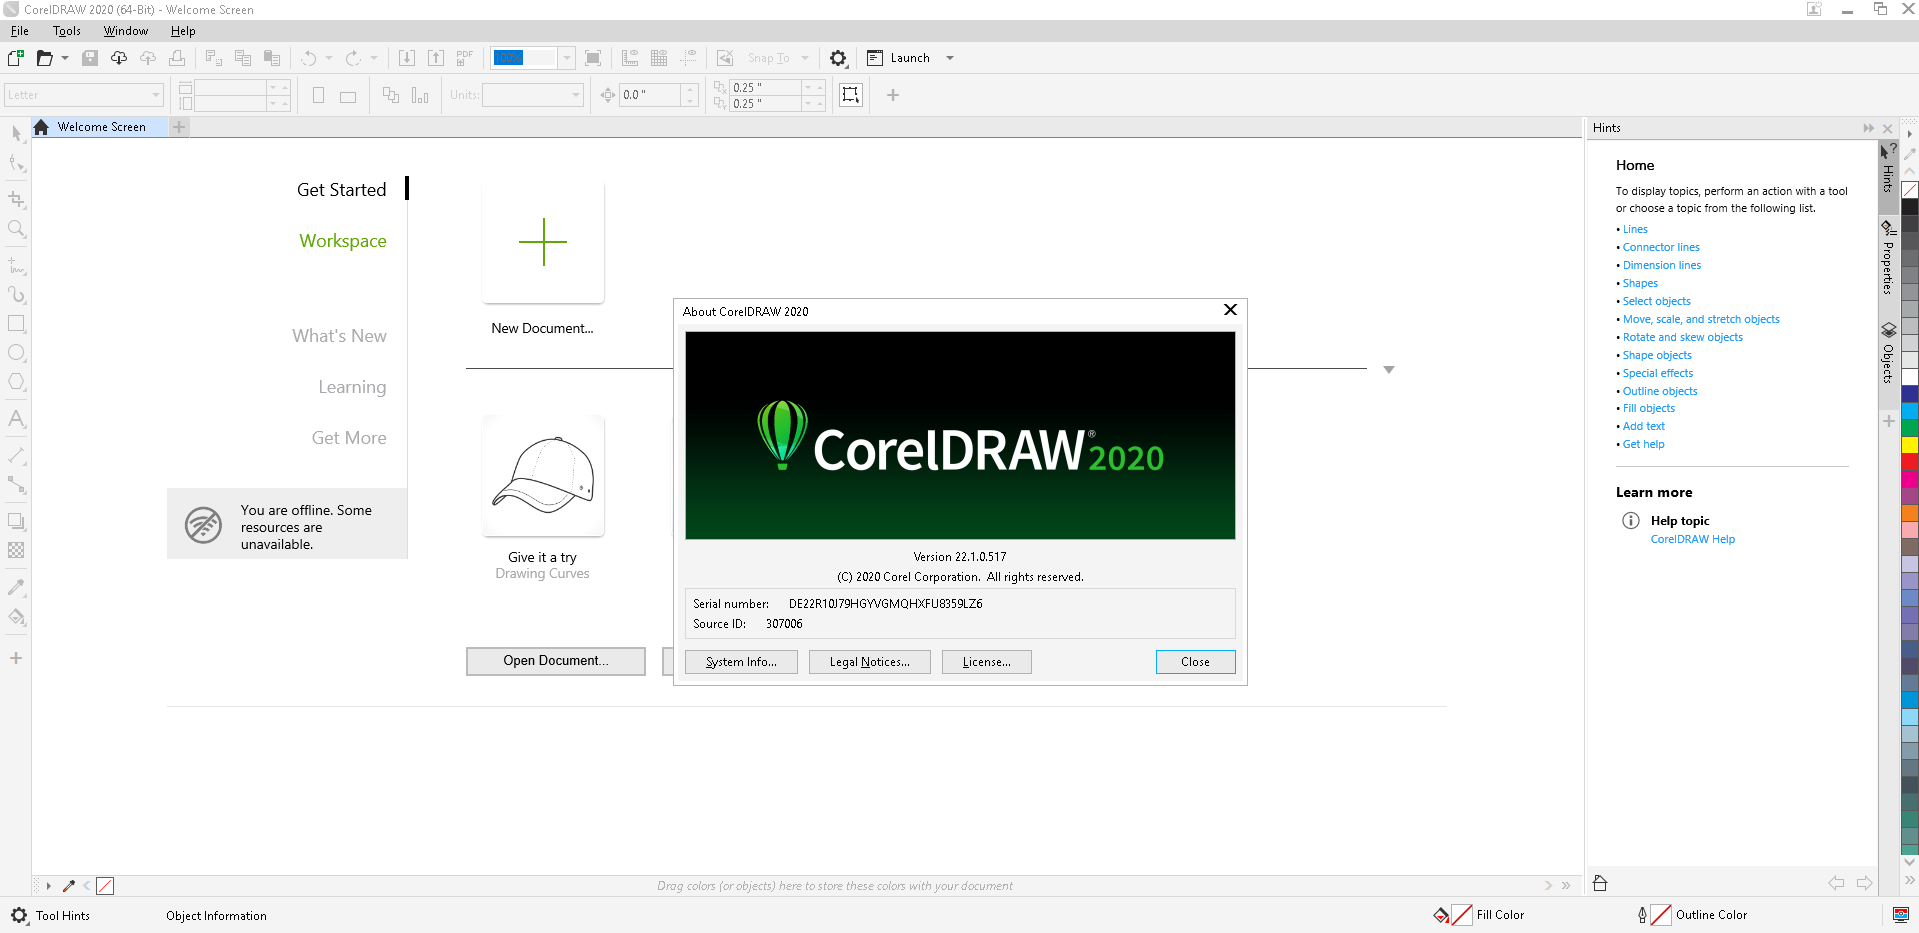 download CorelDRAW Technical Suite 2023 v24.5.0.686